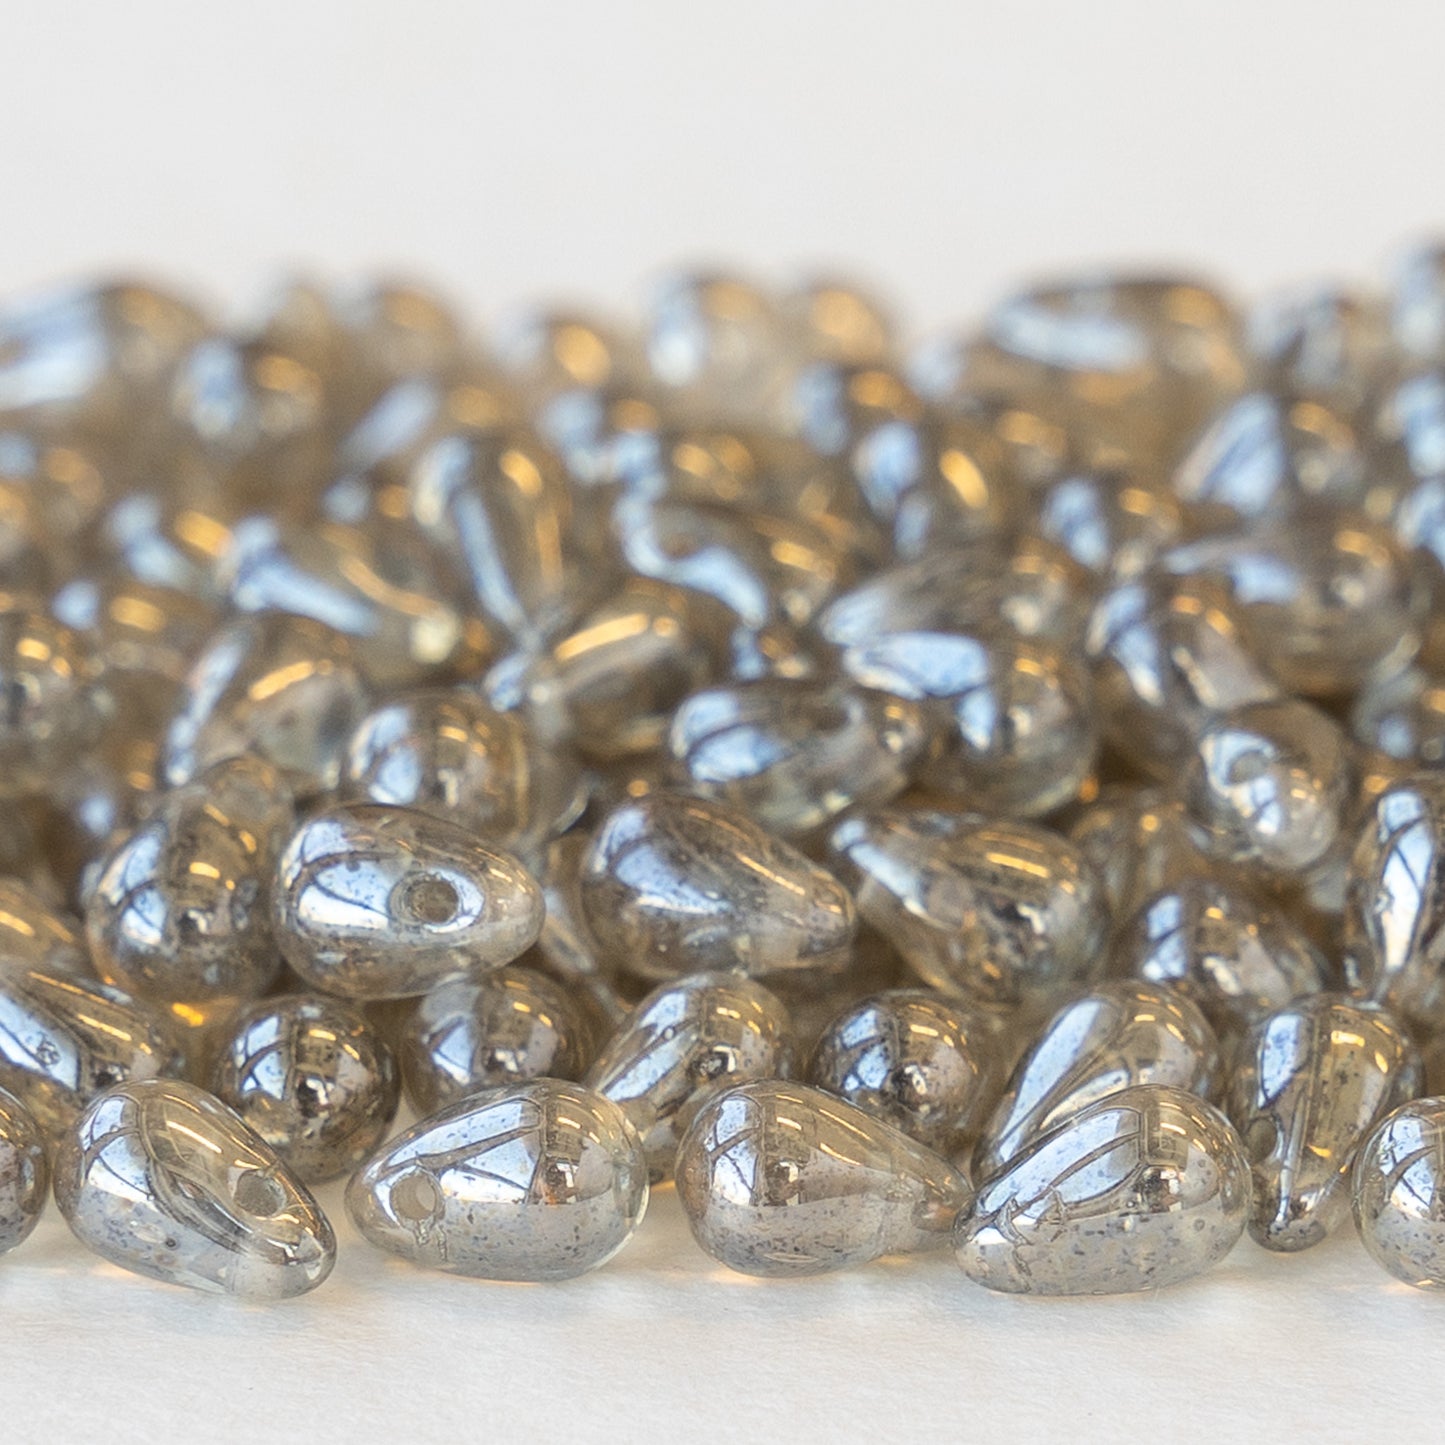 4x6mm Glass Teardrop Beads - Black Diamond Luster - 100 Beads